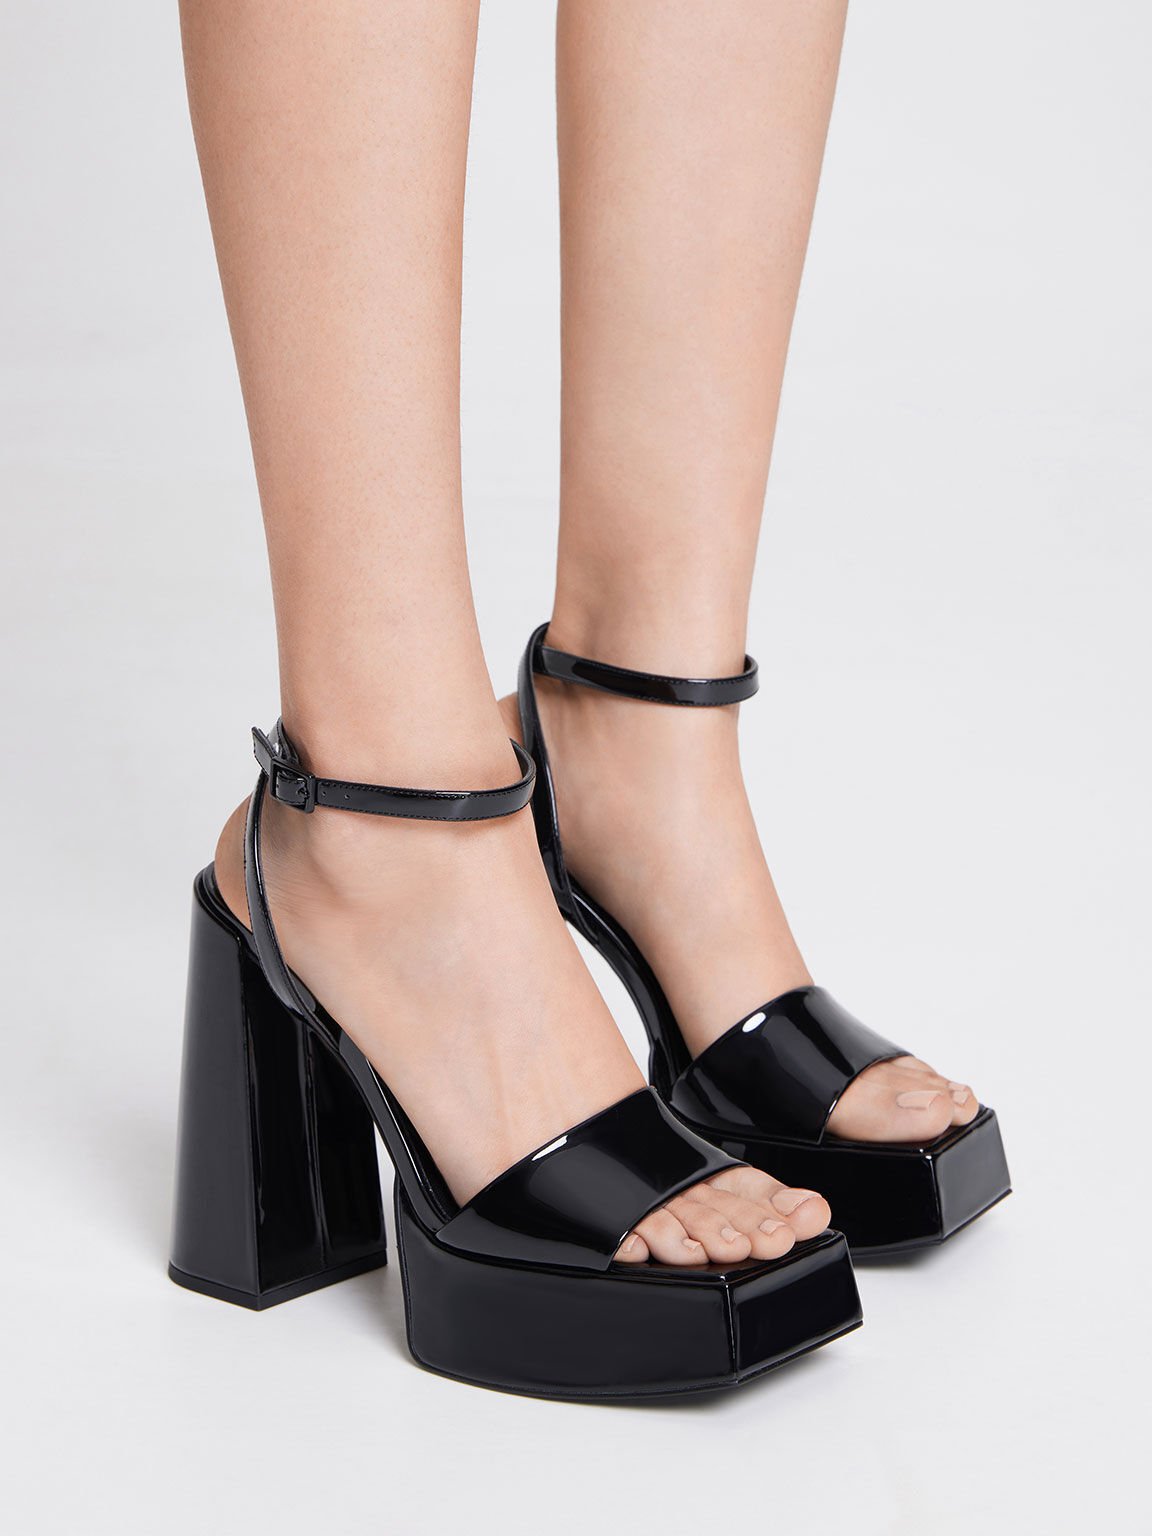 Women’s black patent ankle-strap platform sandals - CHARLES & KEITH